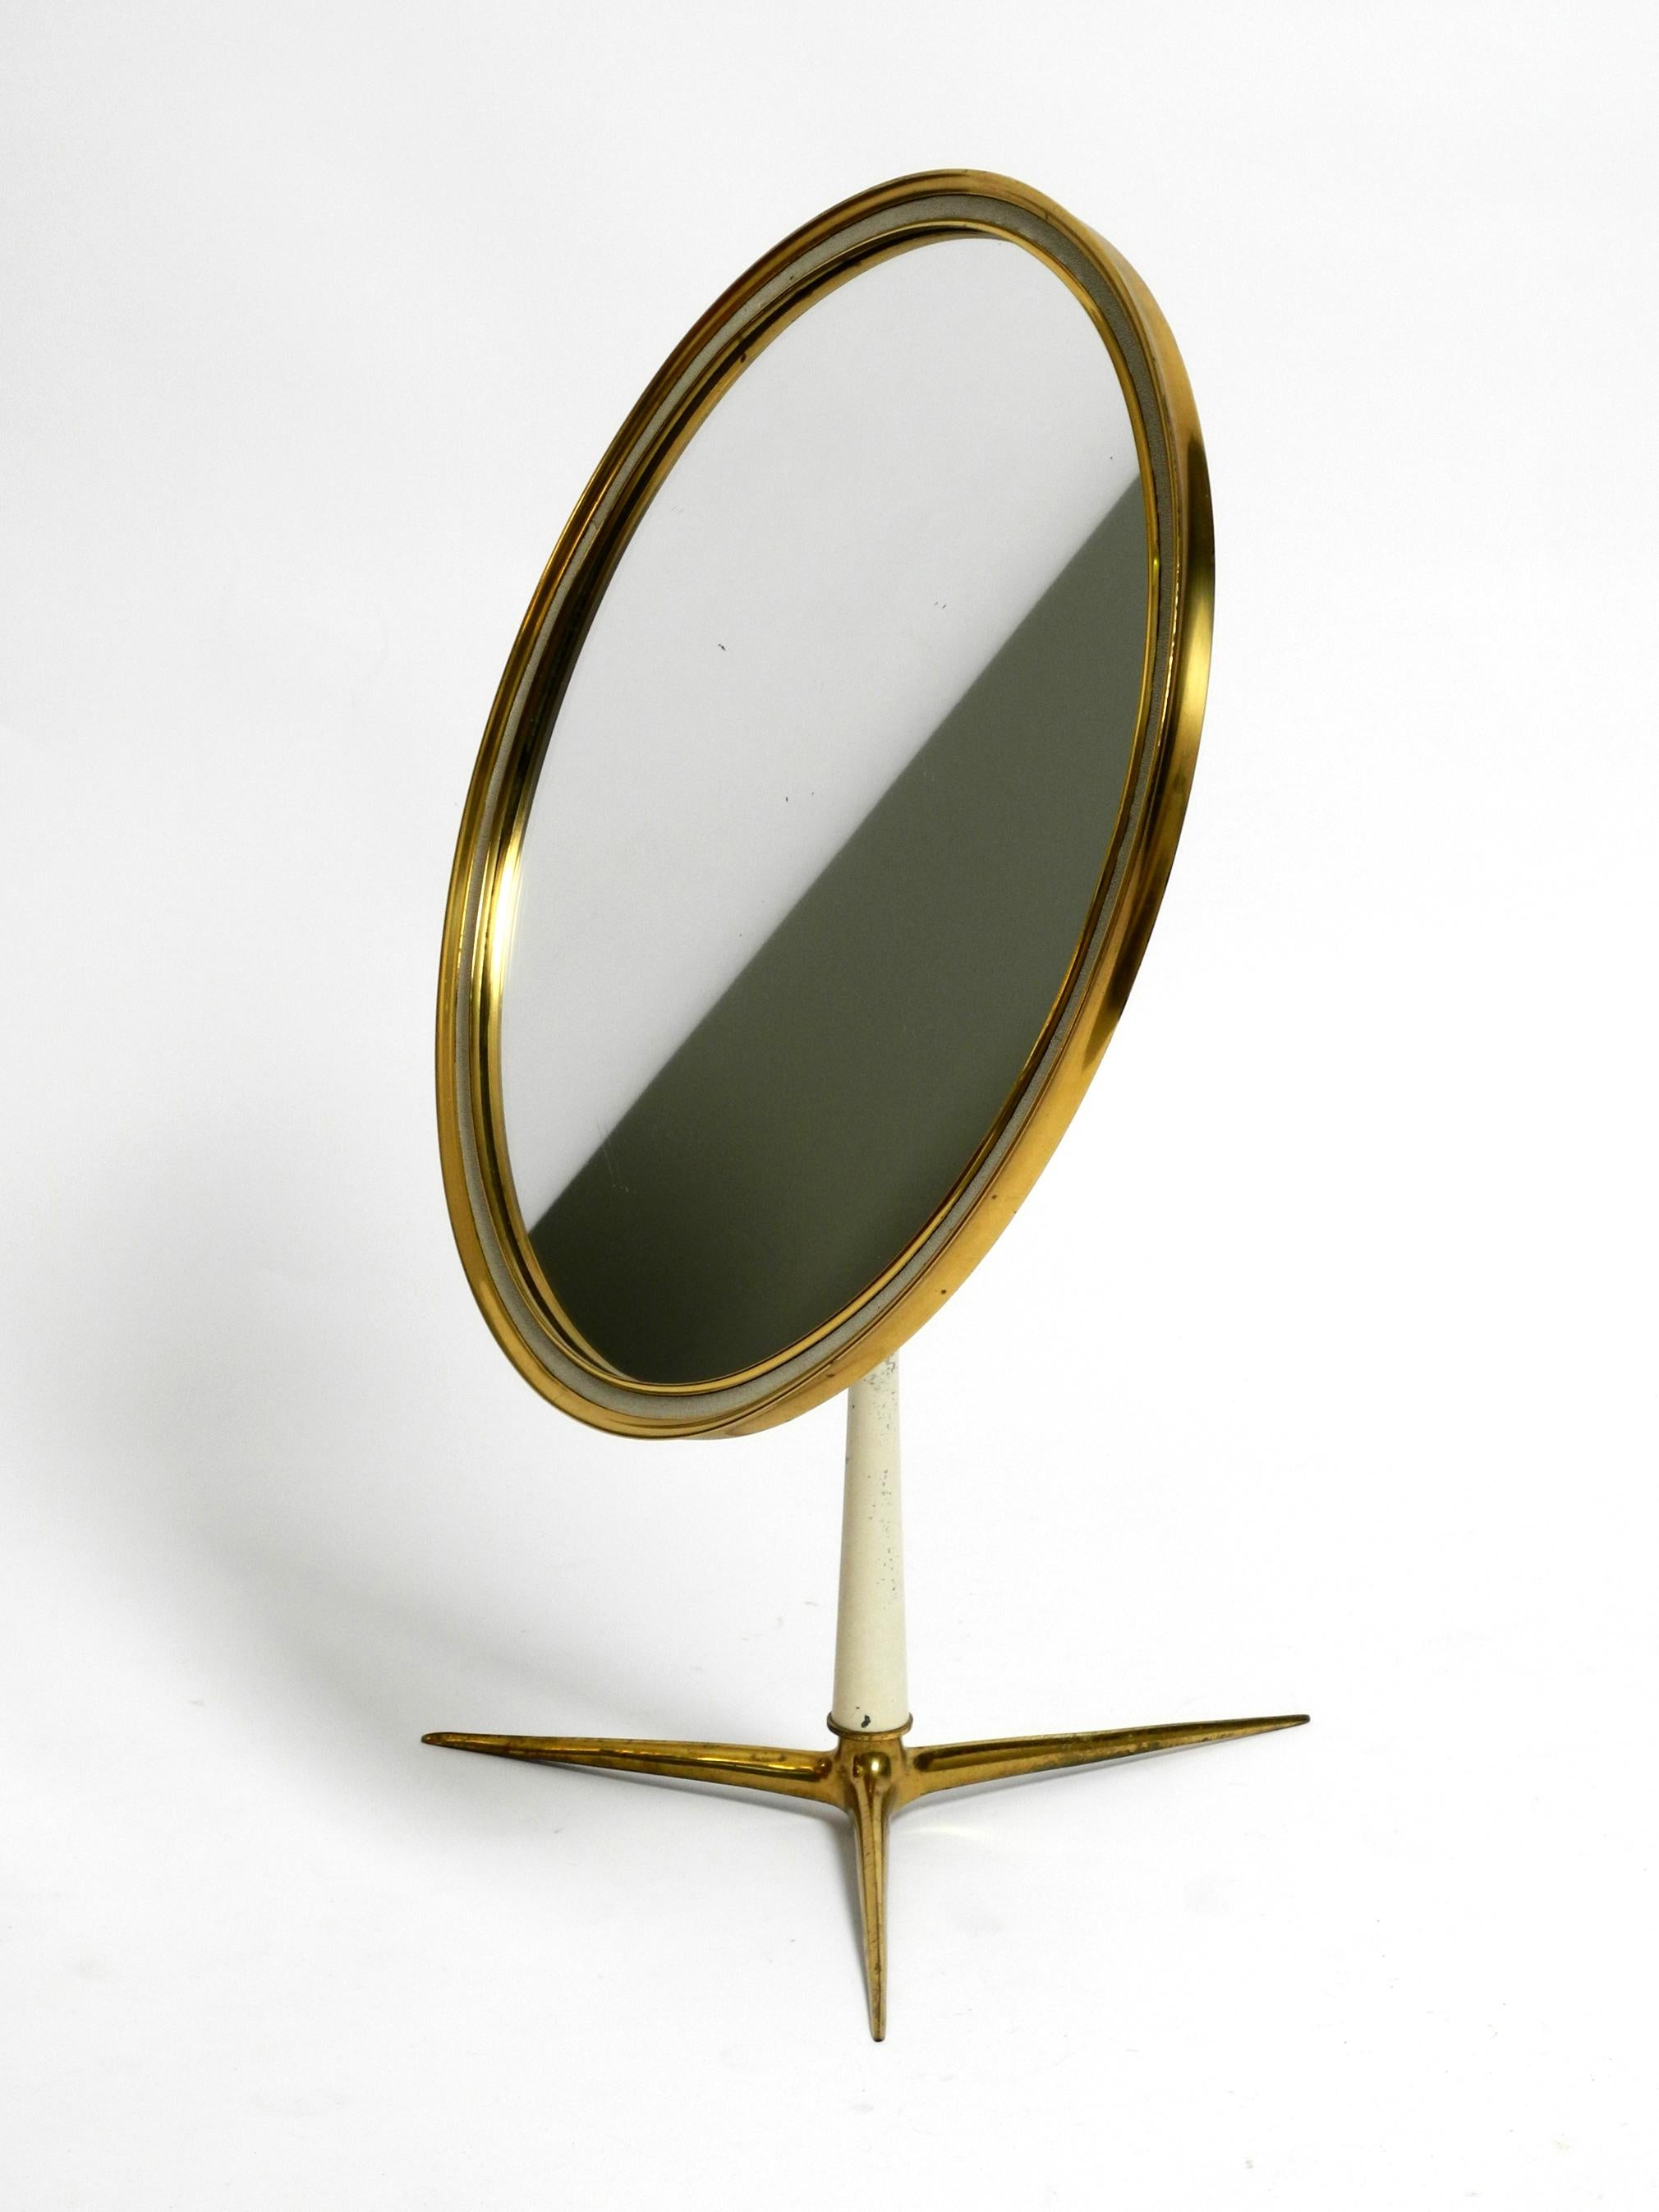 Moveable, Large, Midcentury Brass Table Mirror by Vereinigten Werkstätten For Sale 7